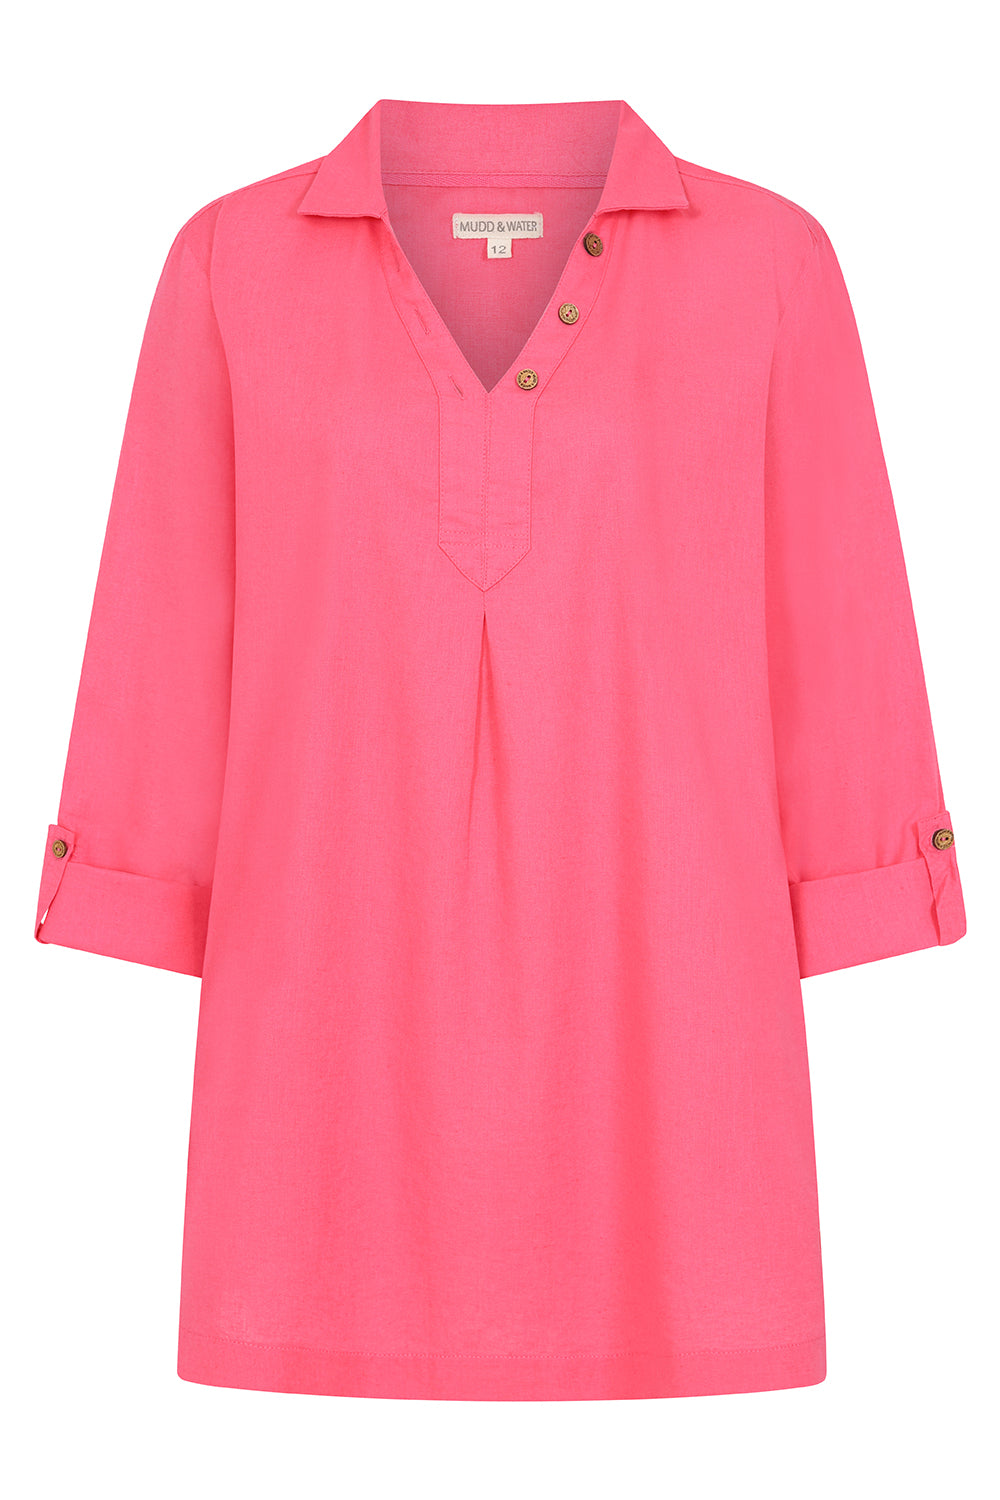 Springtime Tunic - Pink - Organic Cotton Linen Blend